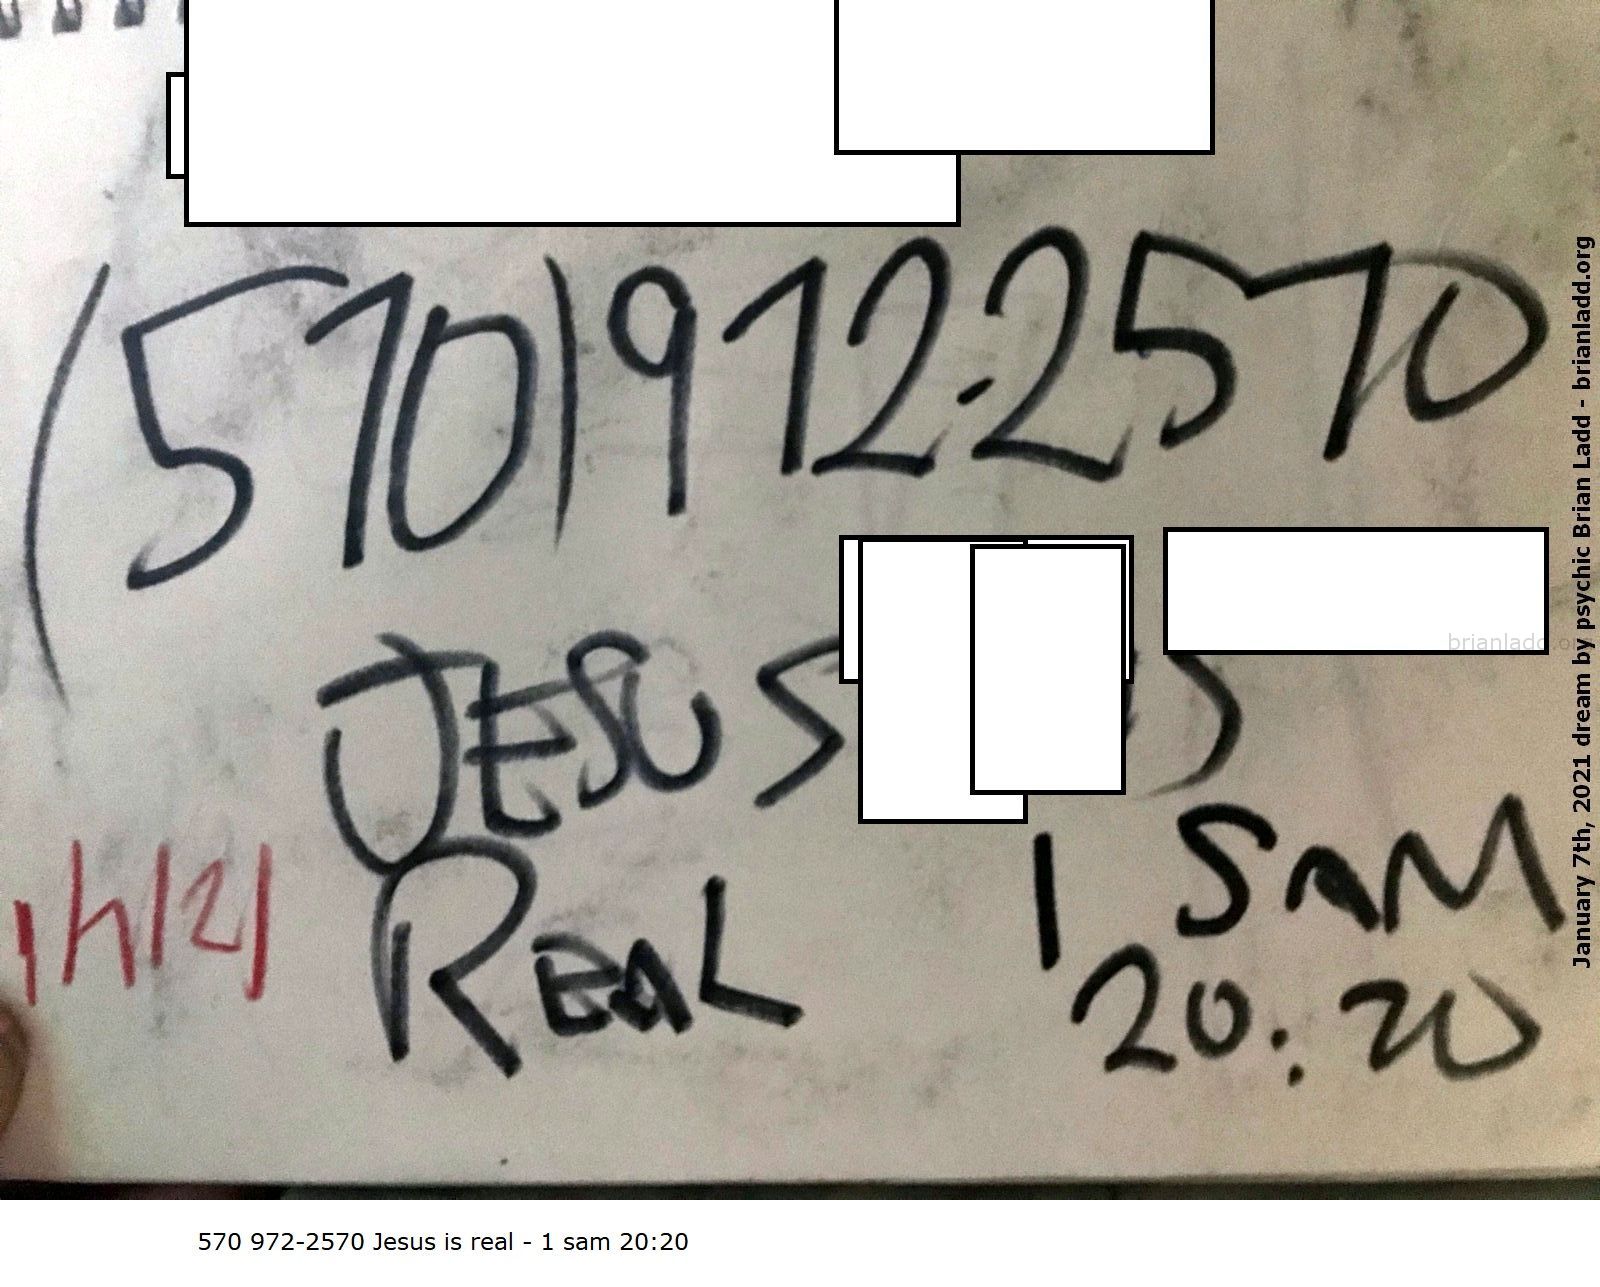 14276 7 January 2021 4 - 570 972-2570 Jesus Is Real - 1 Sam 20:20...
570 972-2570 Jesus Is Real - 1 Sam 20:20
